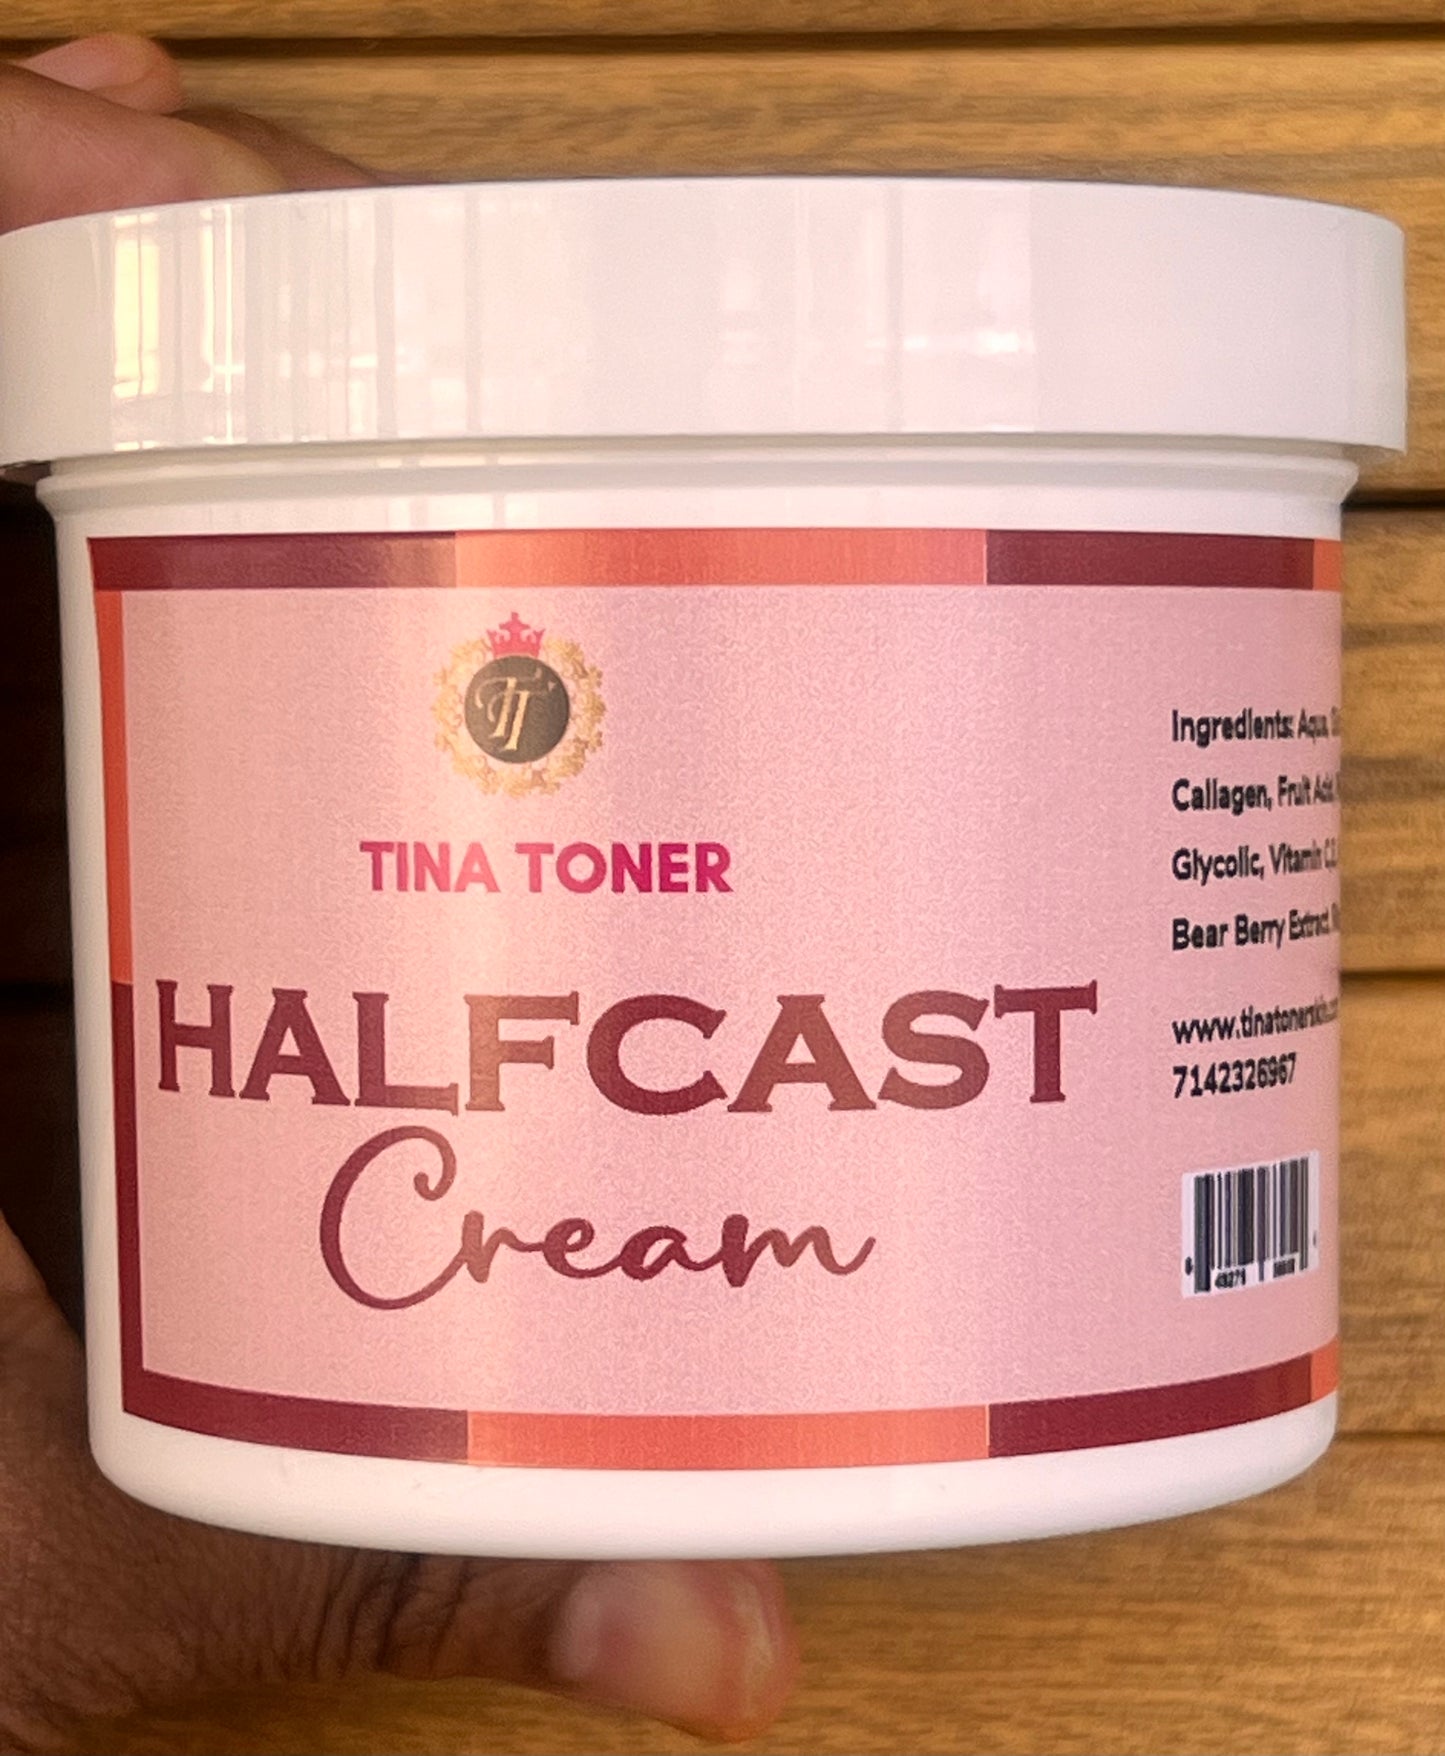 Half cast cream, face and soap 12 oz large